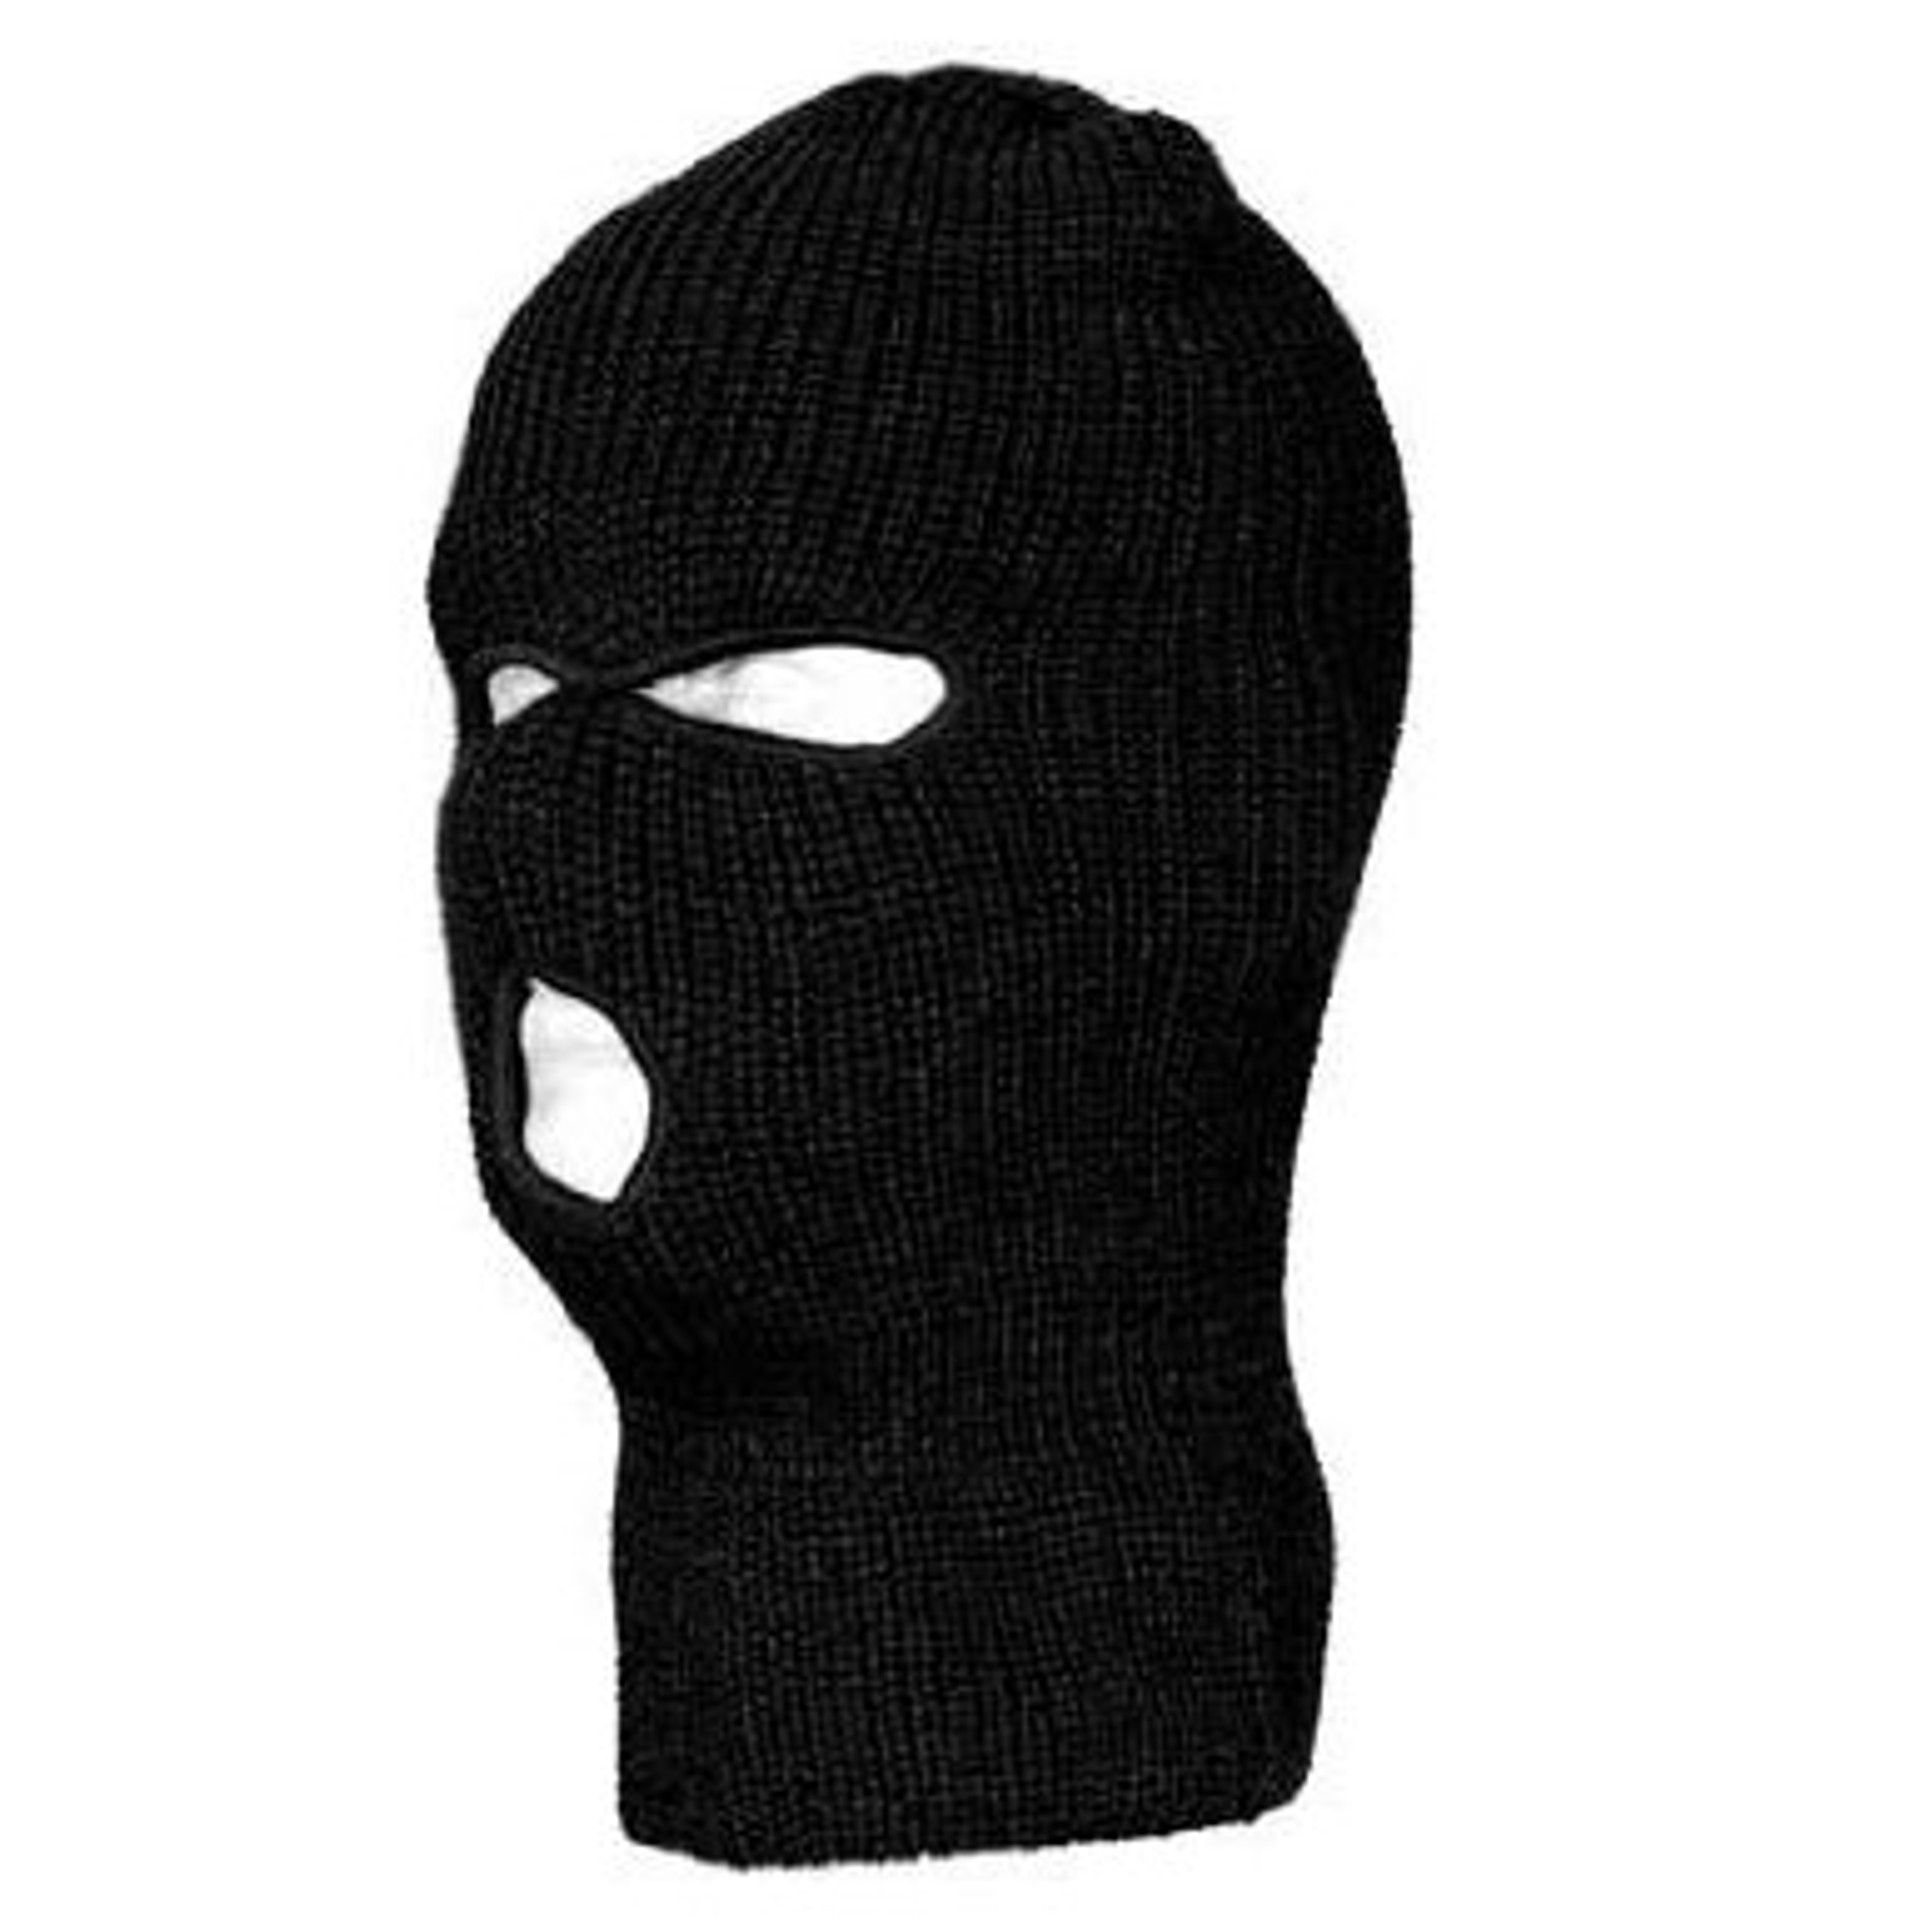 Three Hole Knit Ski Mask - Black 3056 - Private Island Party